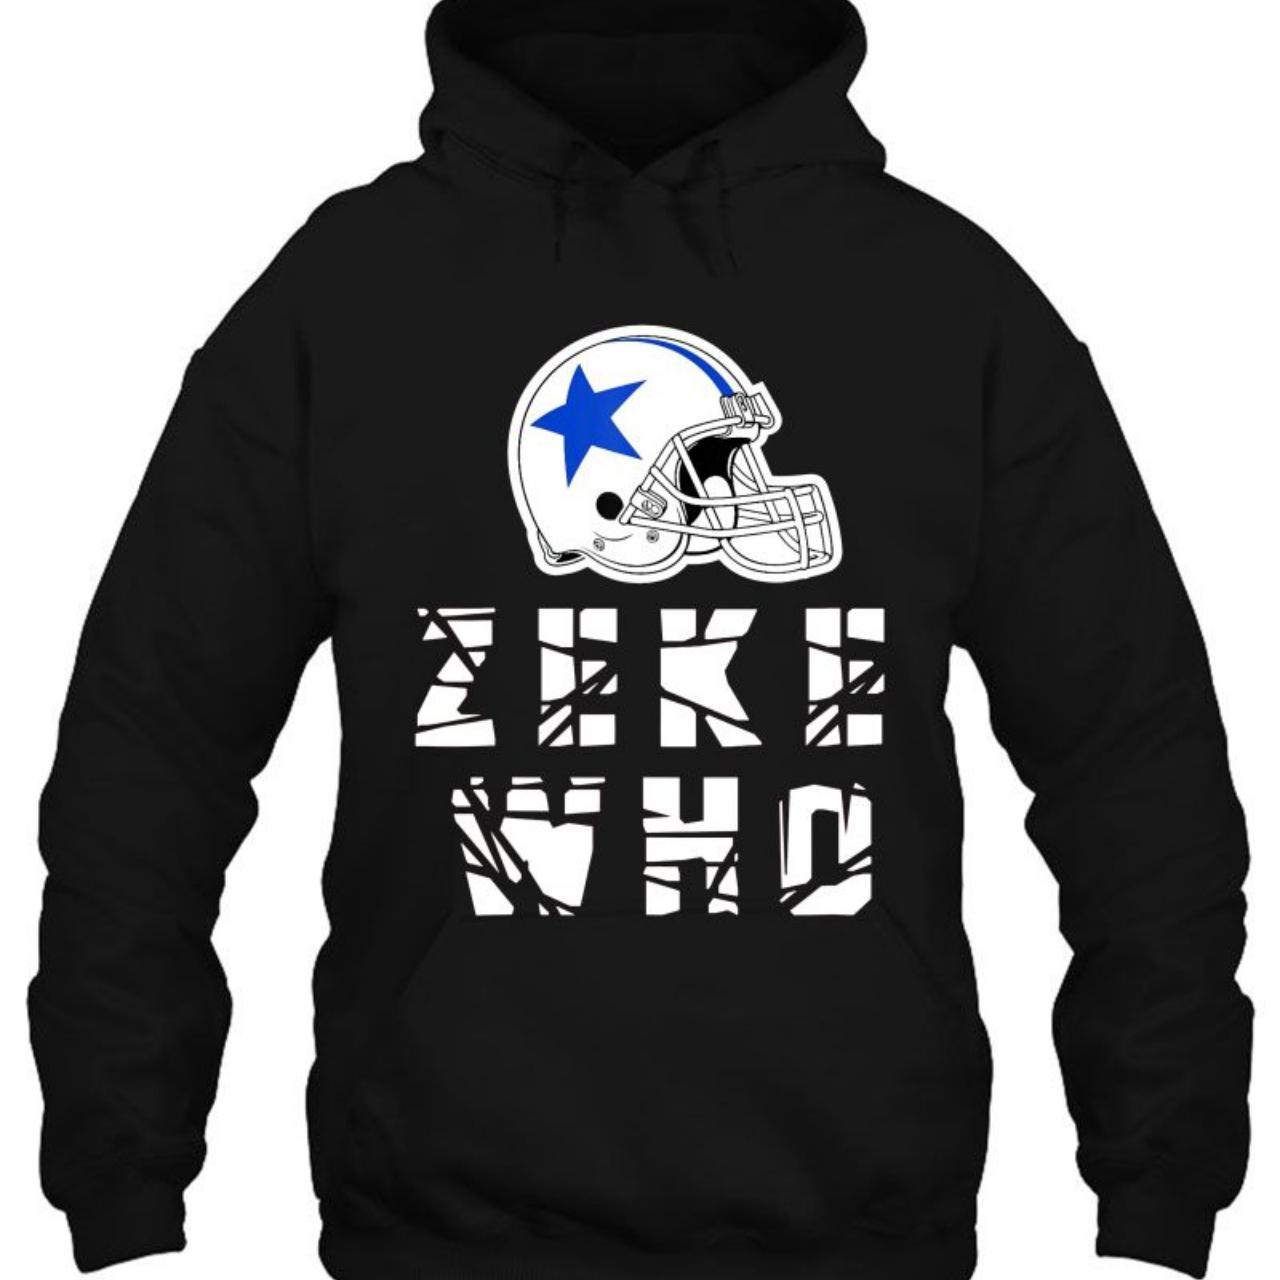 Product Image 2 - Zeke Who Stripe Football Dallas